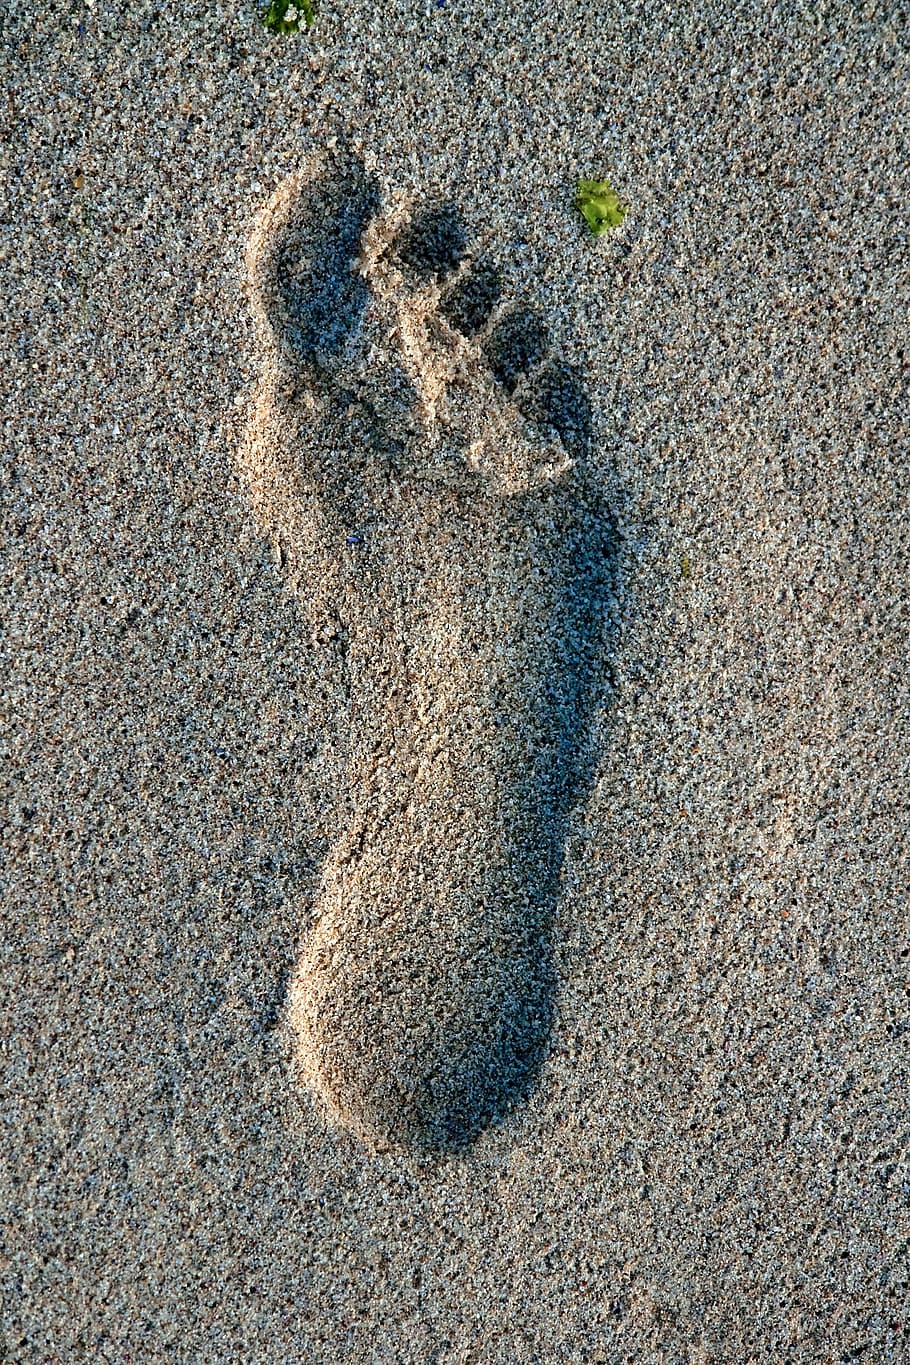 lotus feet of the guru, lotus feet, guru, sand, reprint, feet, sole, ten, impression, beach